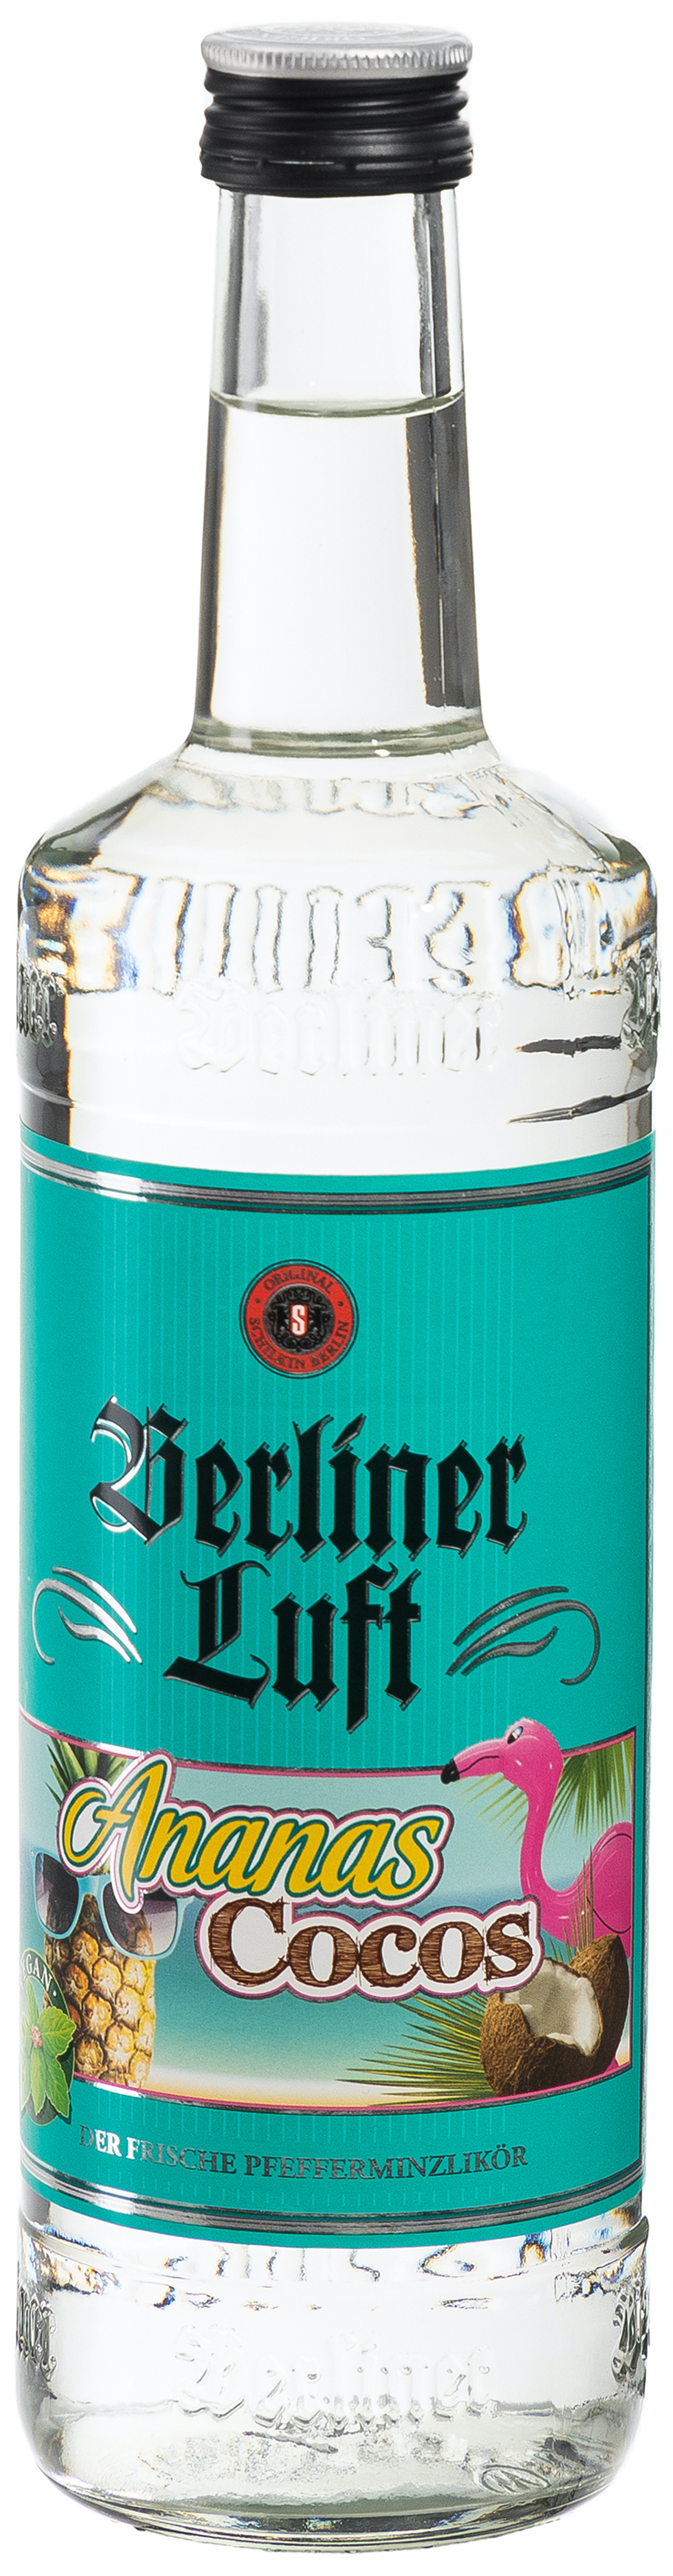 Berliner Luft 18% 0,7l Pfefferminzlikör Chilleoké vol